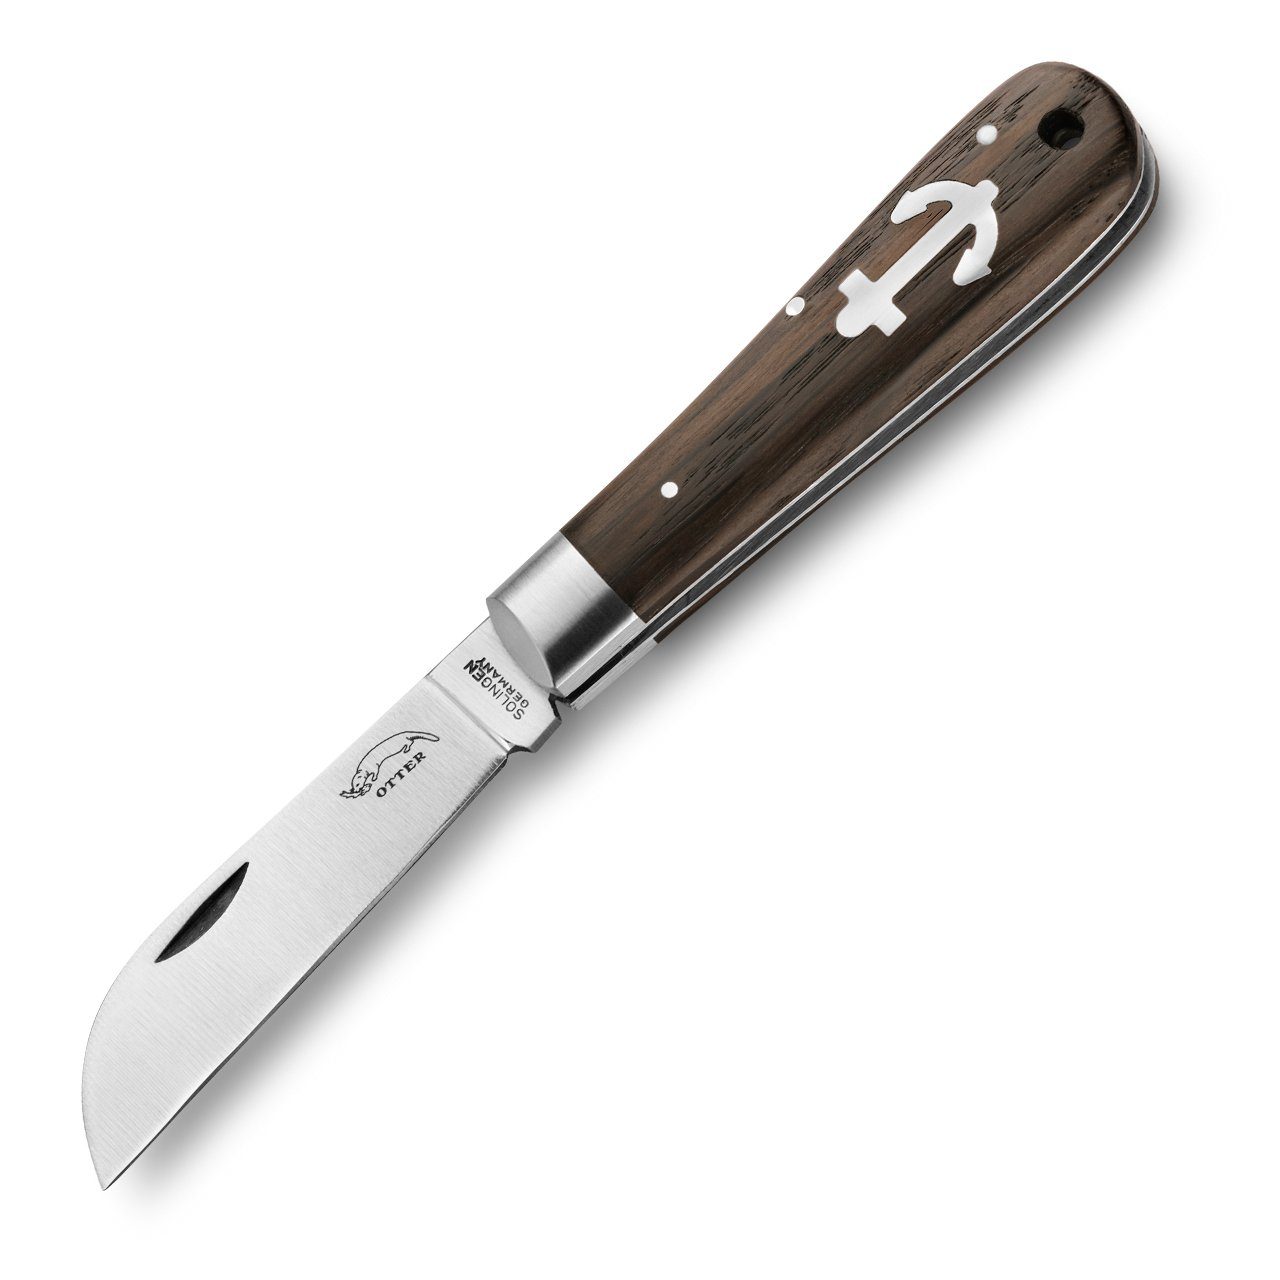 Otter Messer Taschenmesser Anker-Messer groß Carbonstahlklinge, Slipjoint Räuchereiche